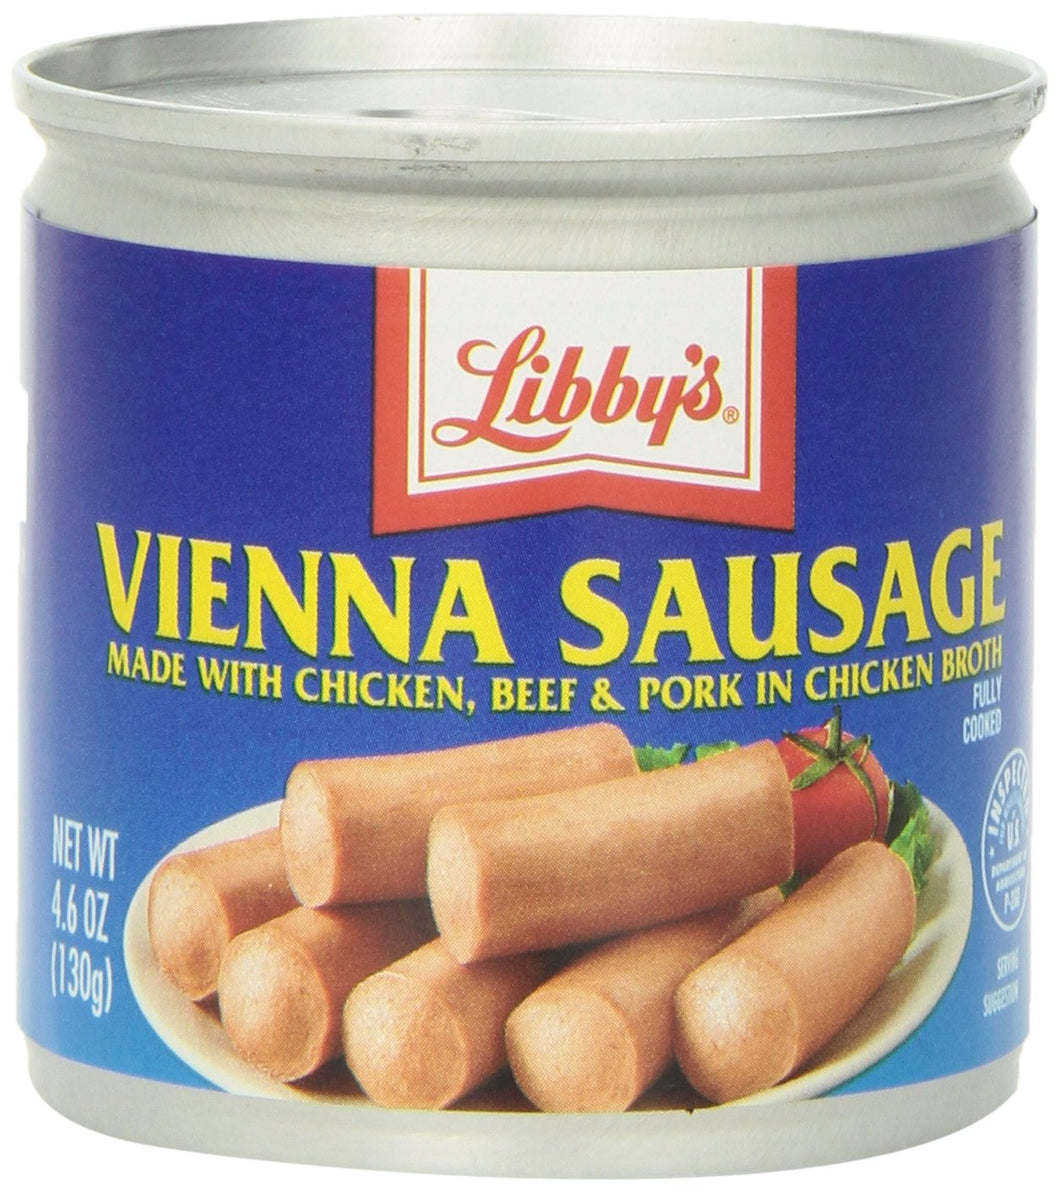 Libby's Vienna sausage in Chicken Broth